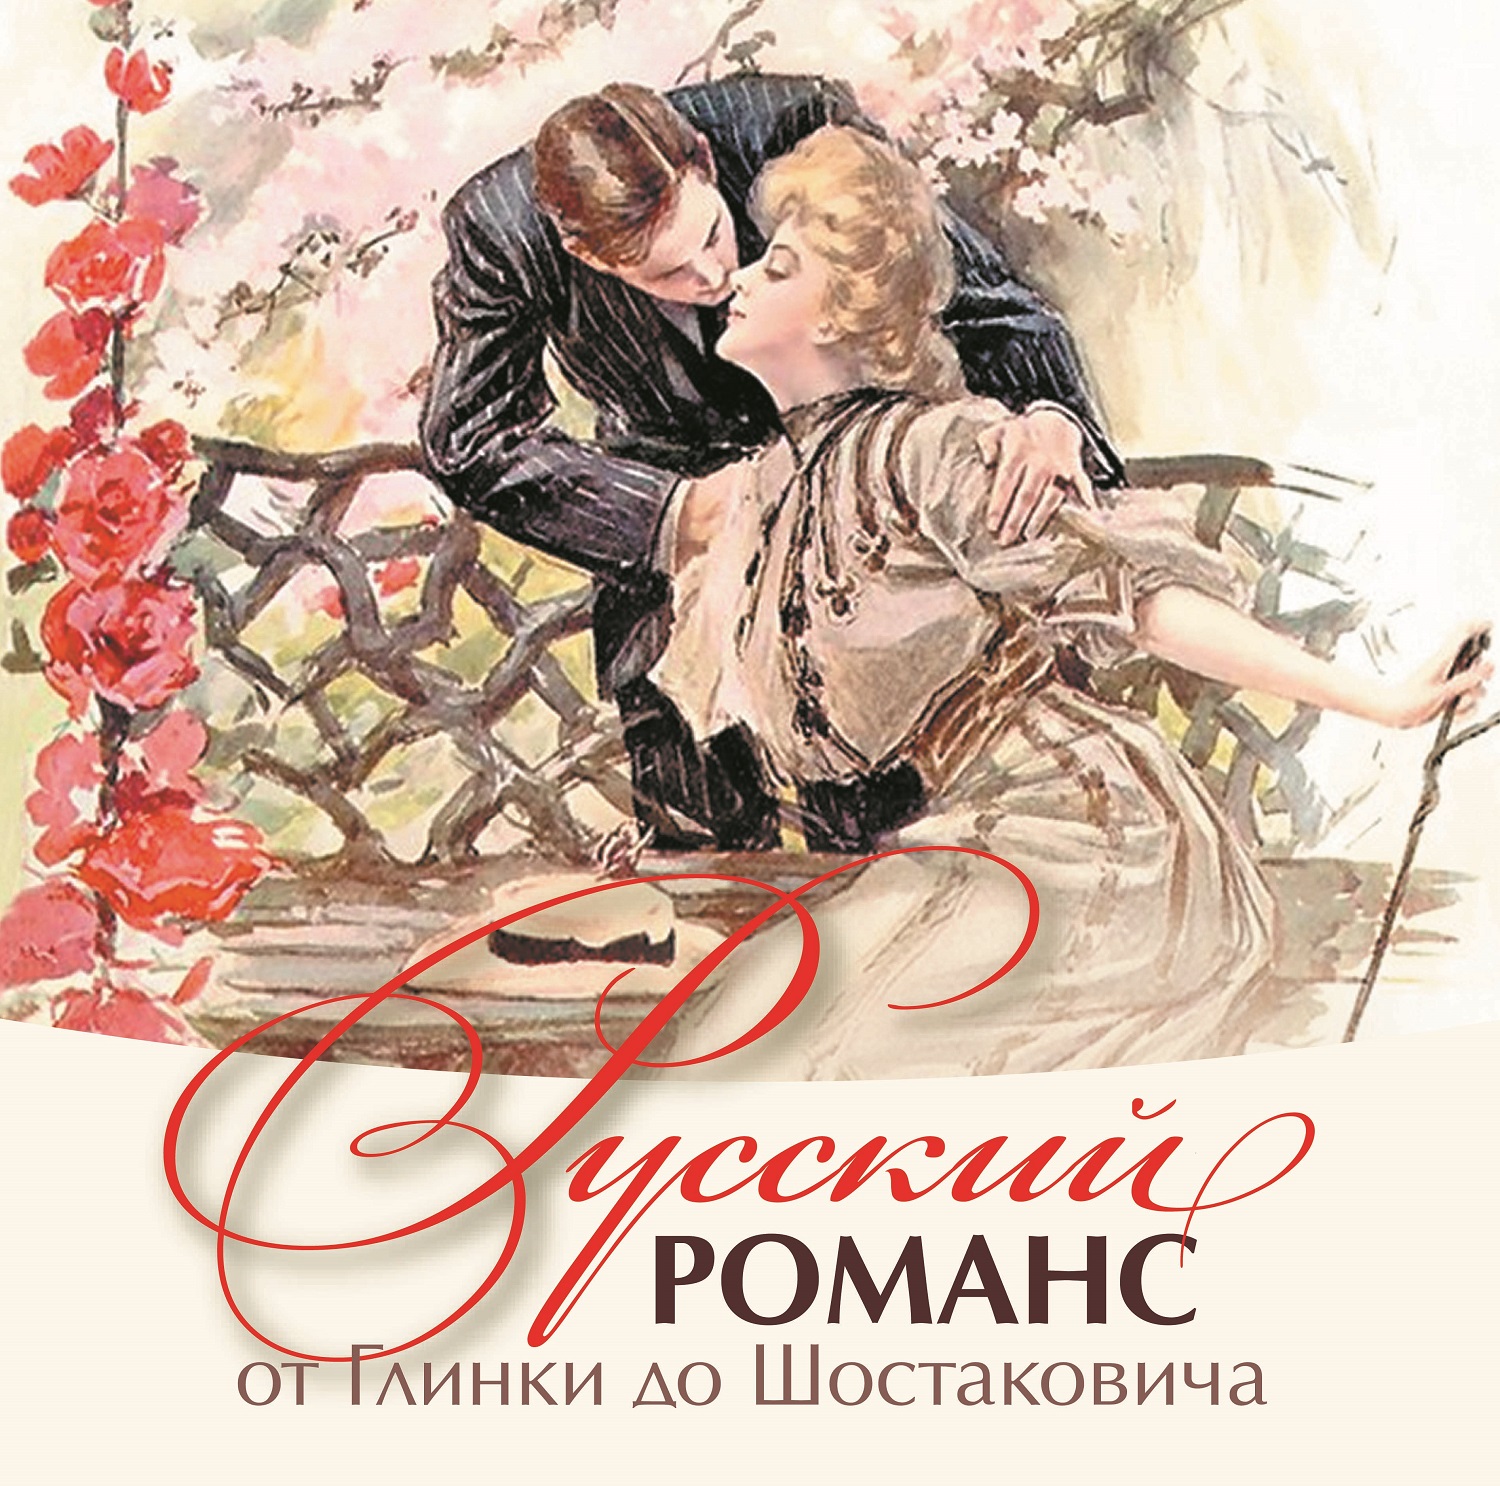 Russian romance